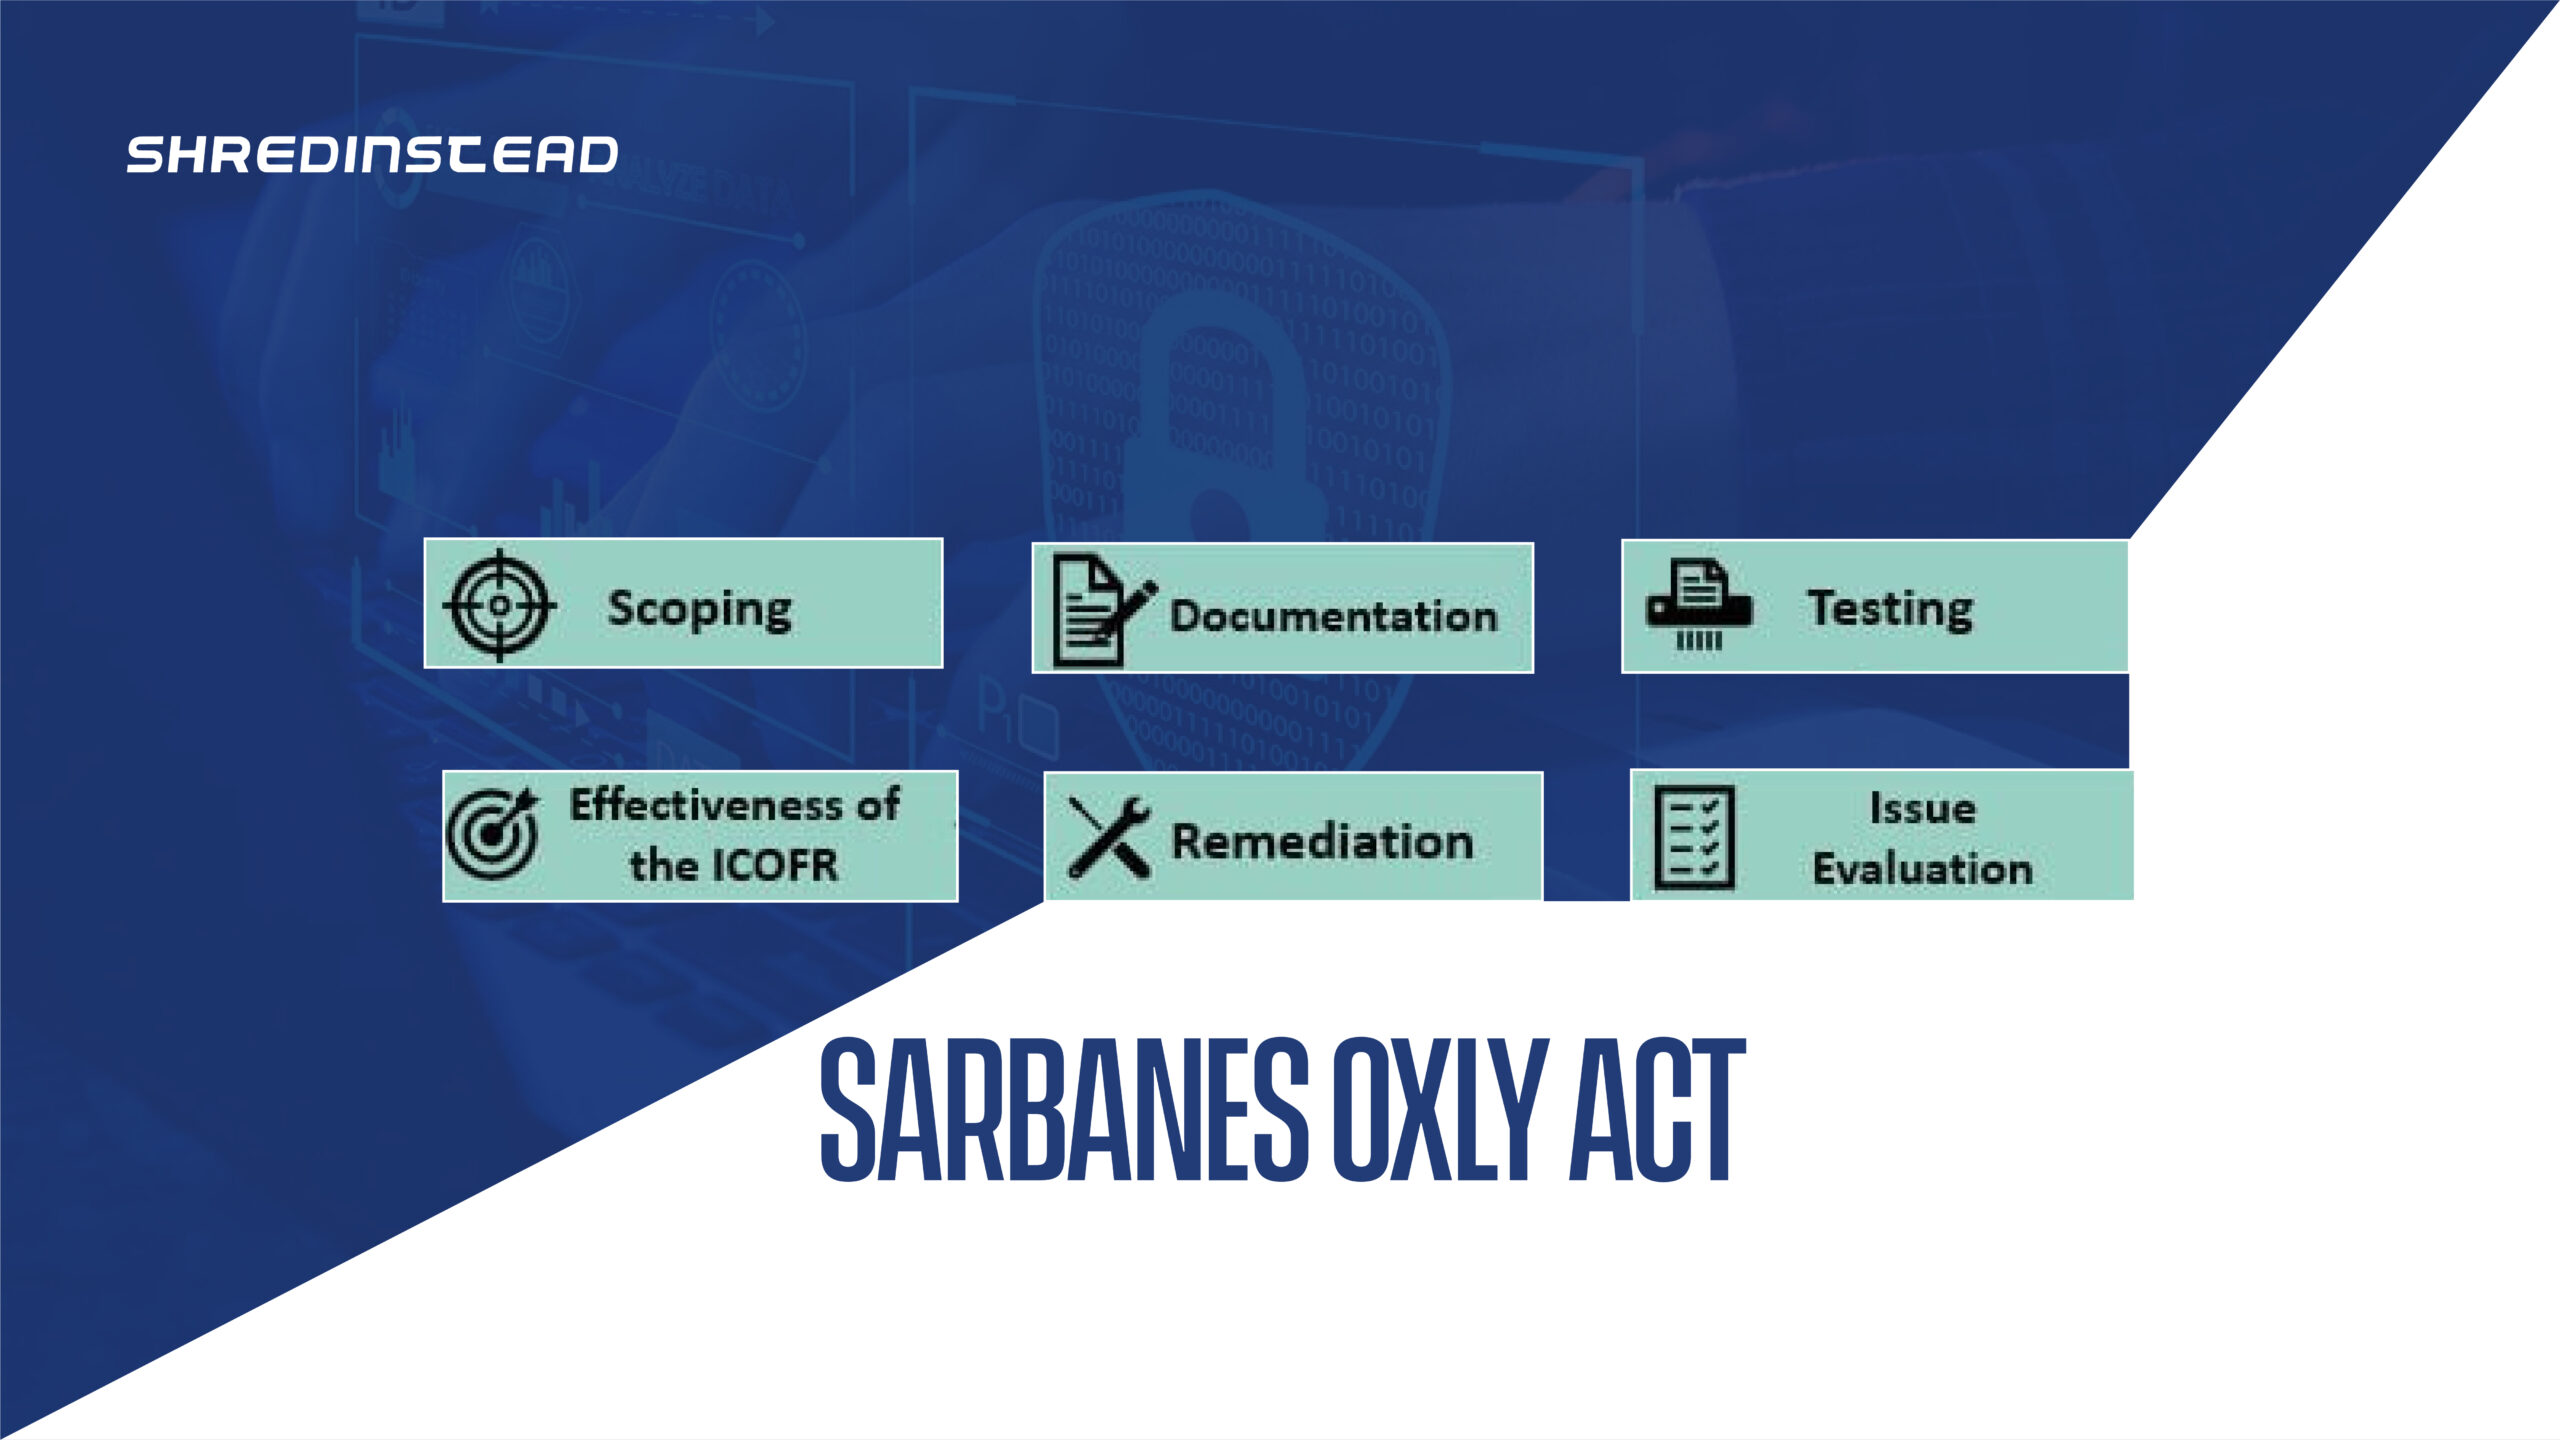 Sarbanes-Oxley Act (SOX)